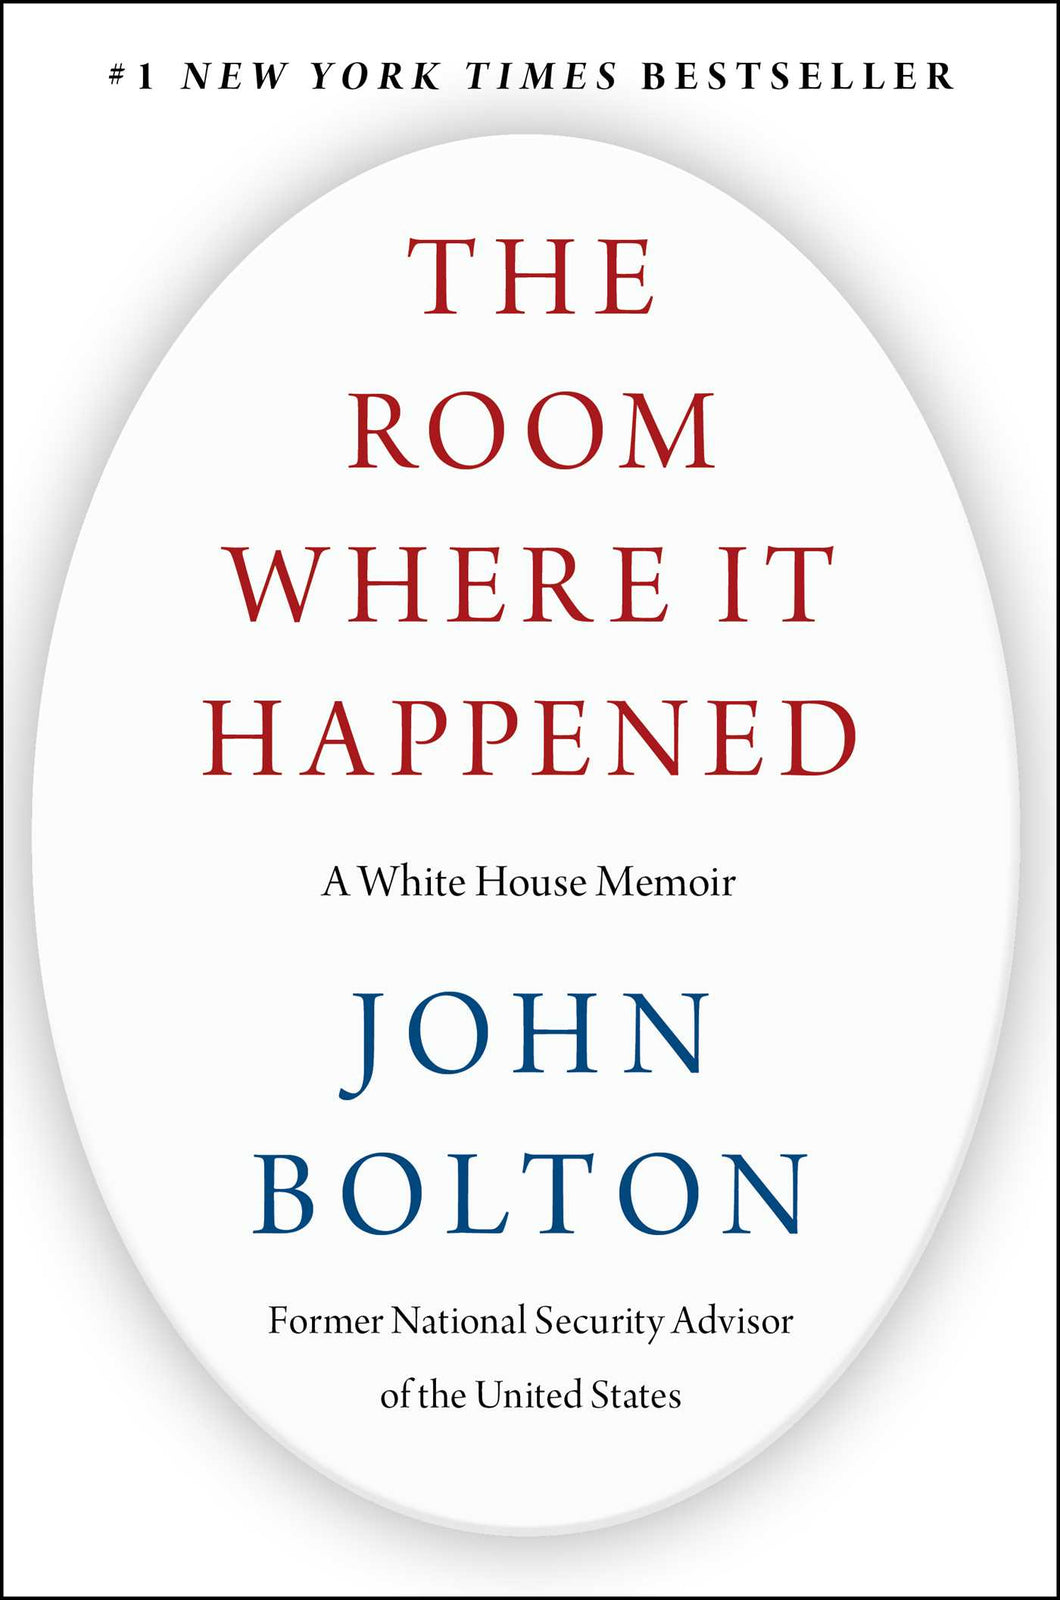 THE ROOM WHERE IT HAPPENED - John Bolton